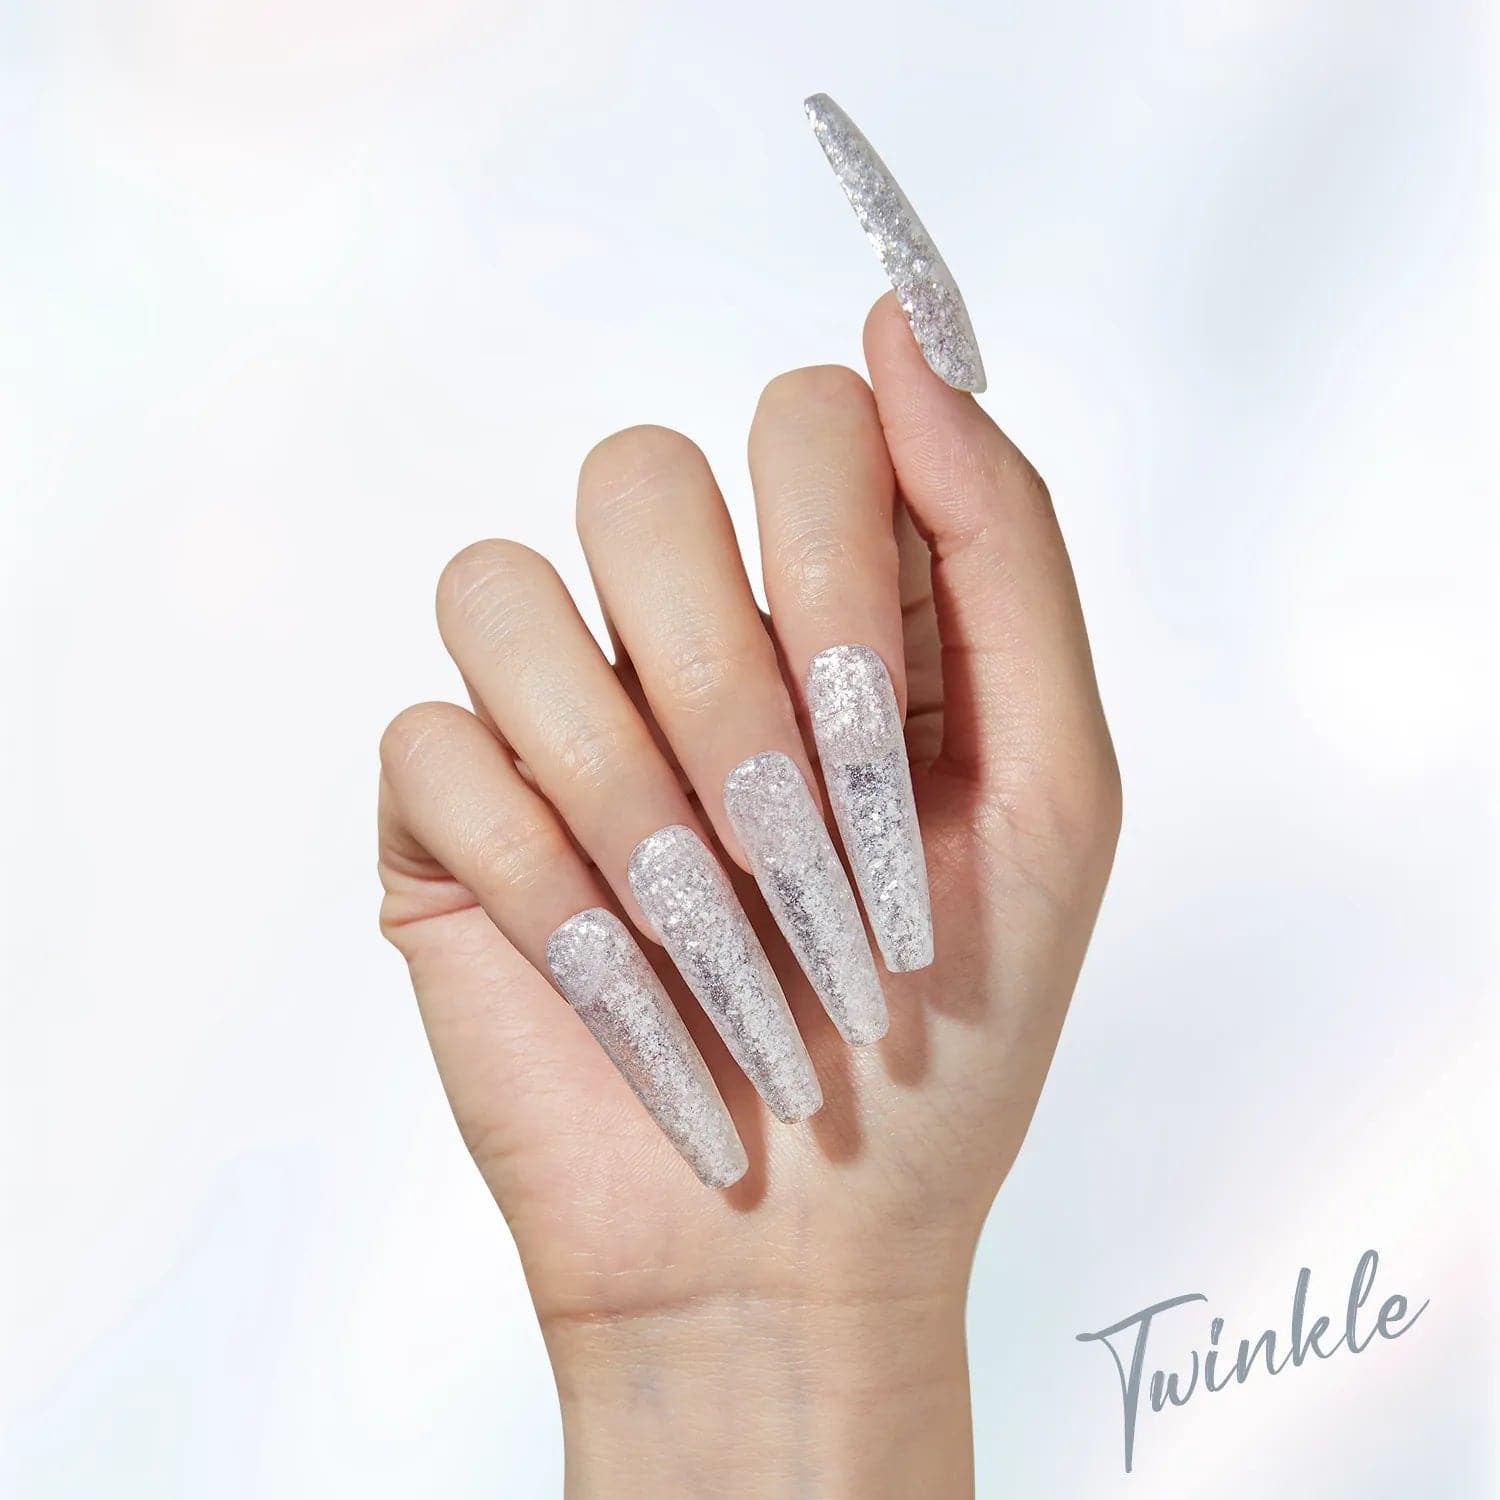 Twinkle - Nail Art Glitter